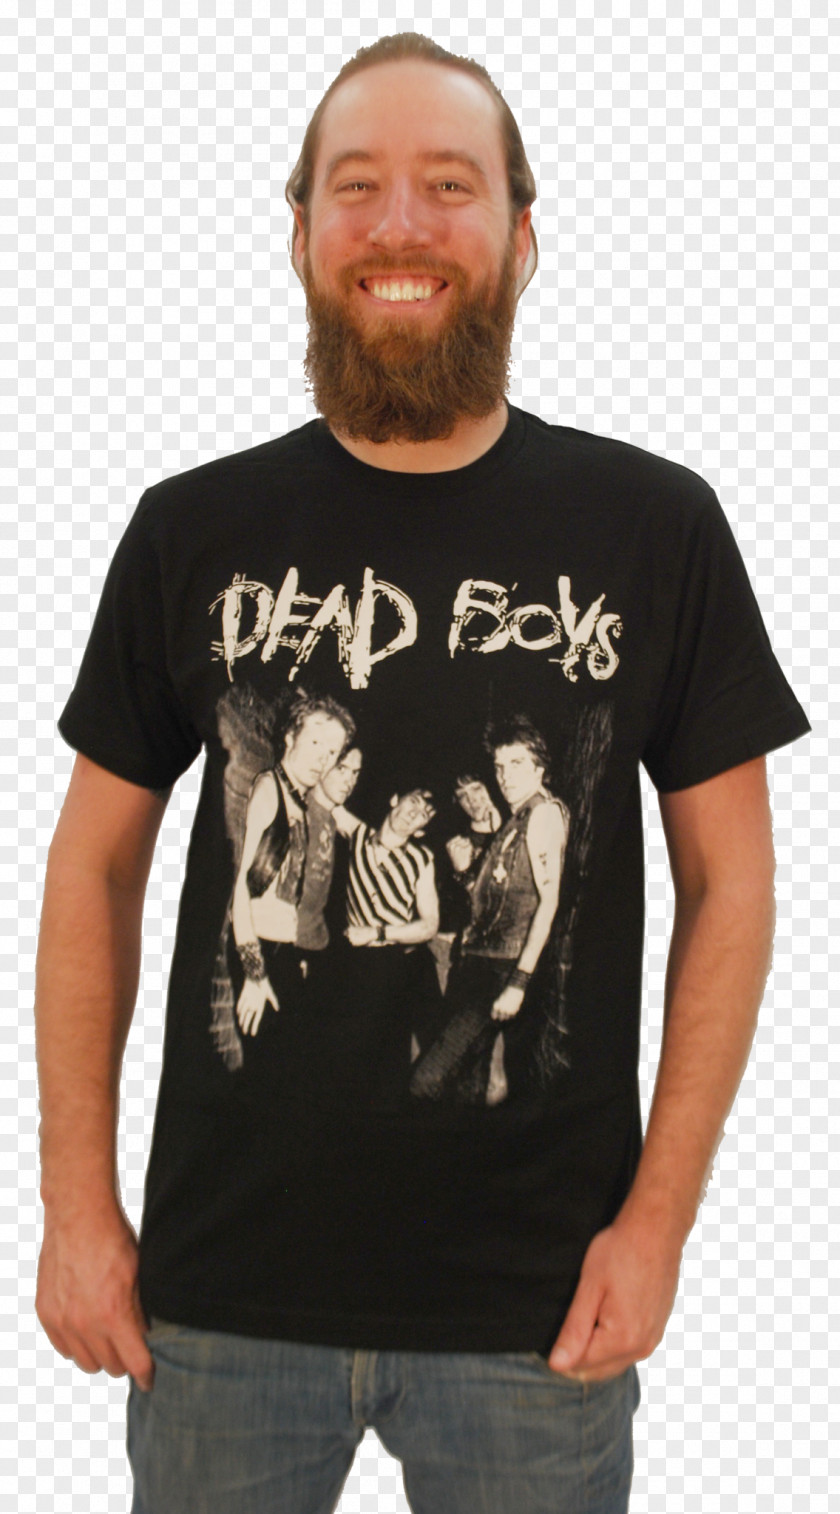 Shirt-boy Cheetah Chrome T-shirt Dead Boys Hoodie PNG